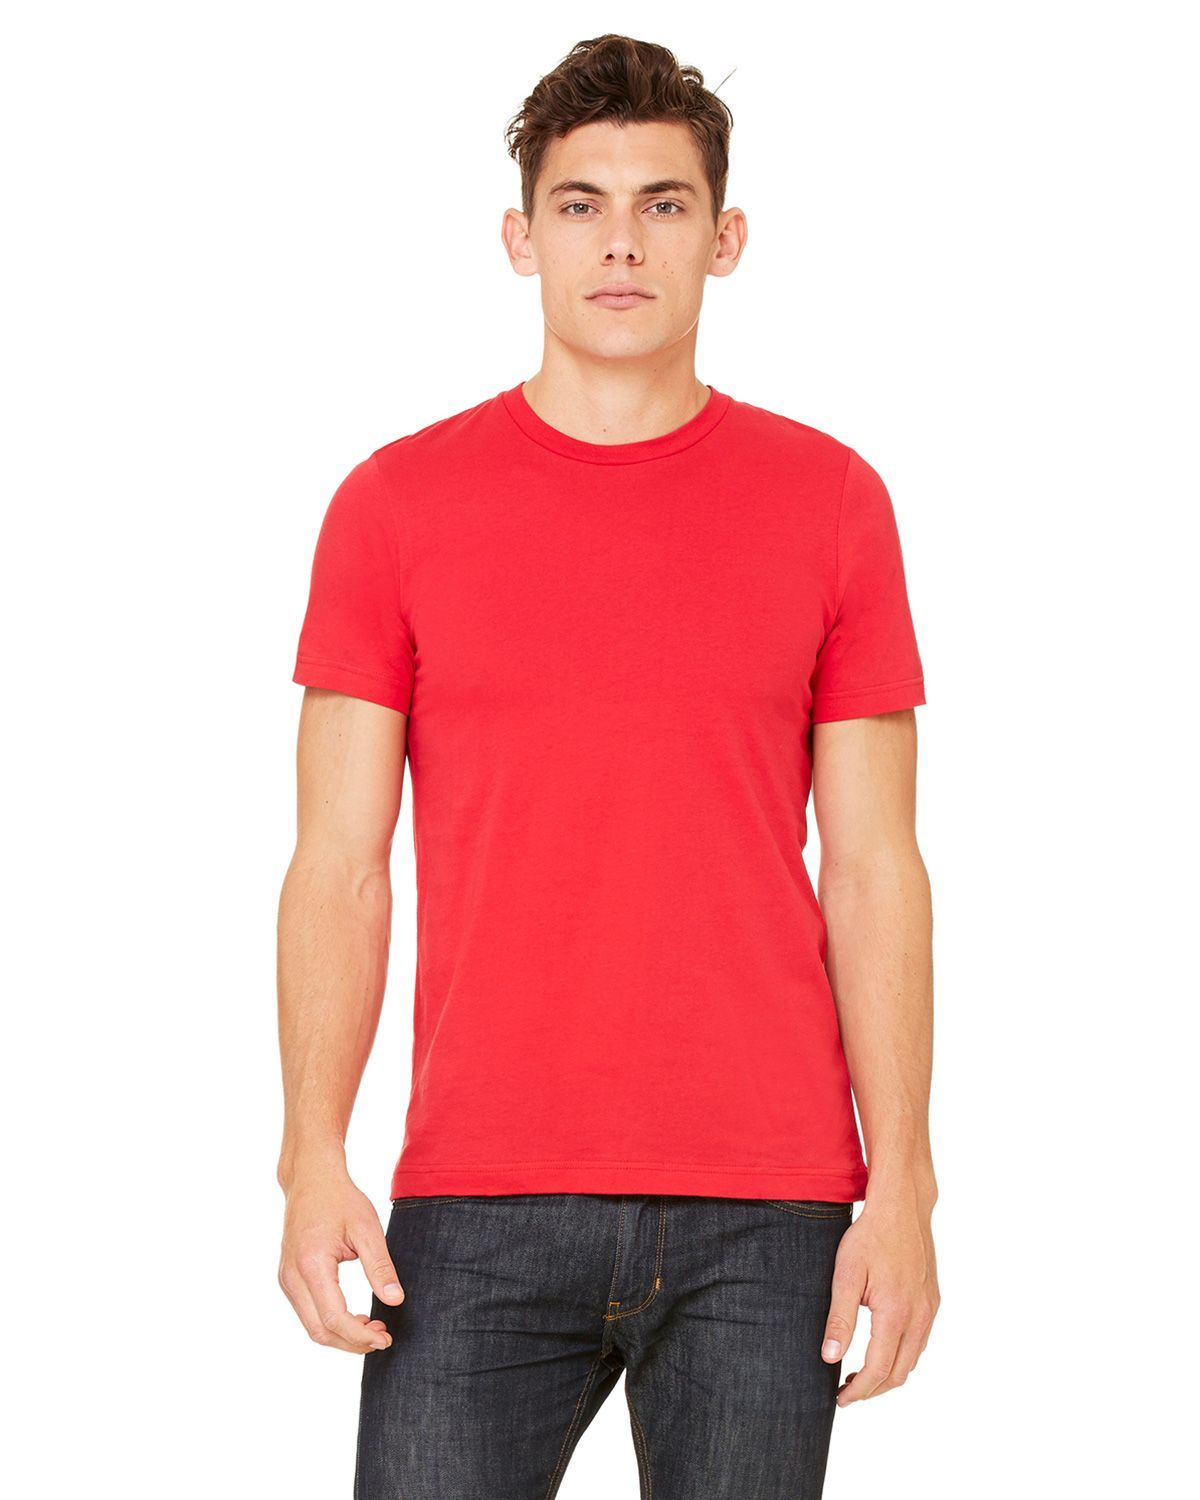 red bella canvas shirt